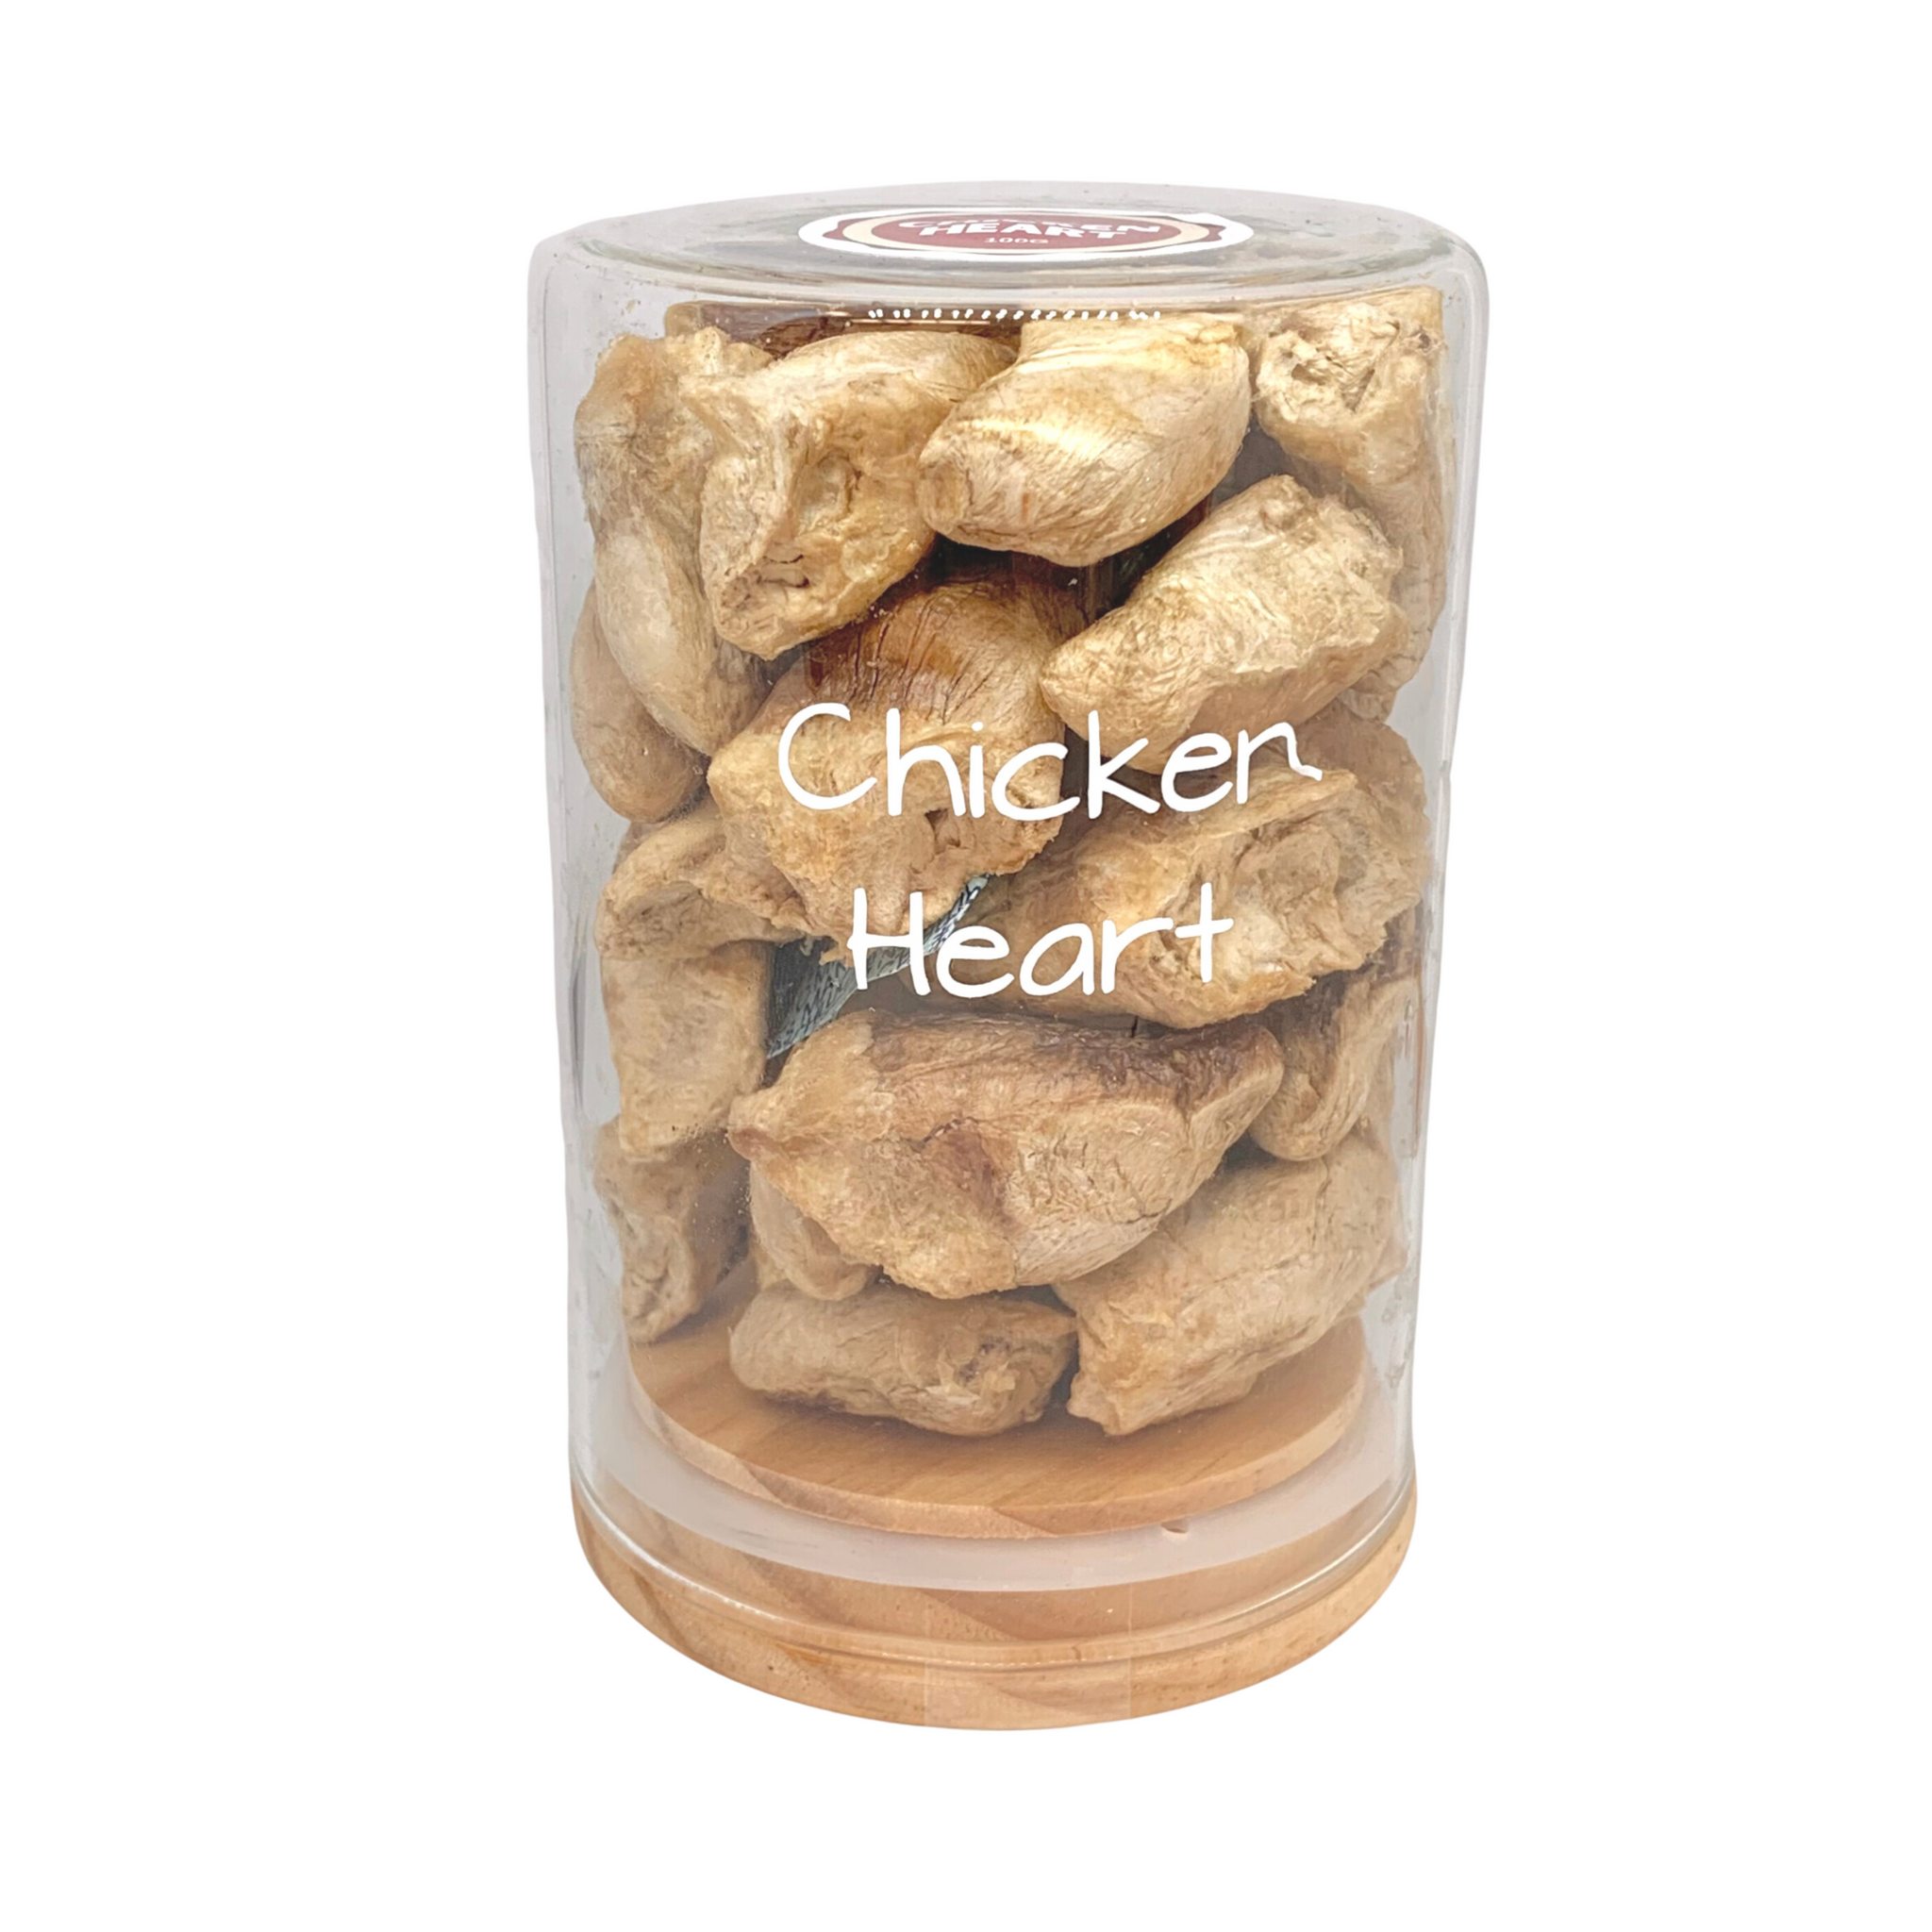 FreezyPaws Superpremium Human Grade Freeze-Dried Chicken Heart Raw Treats 100g